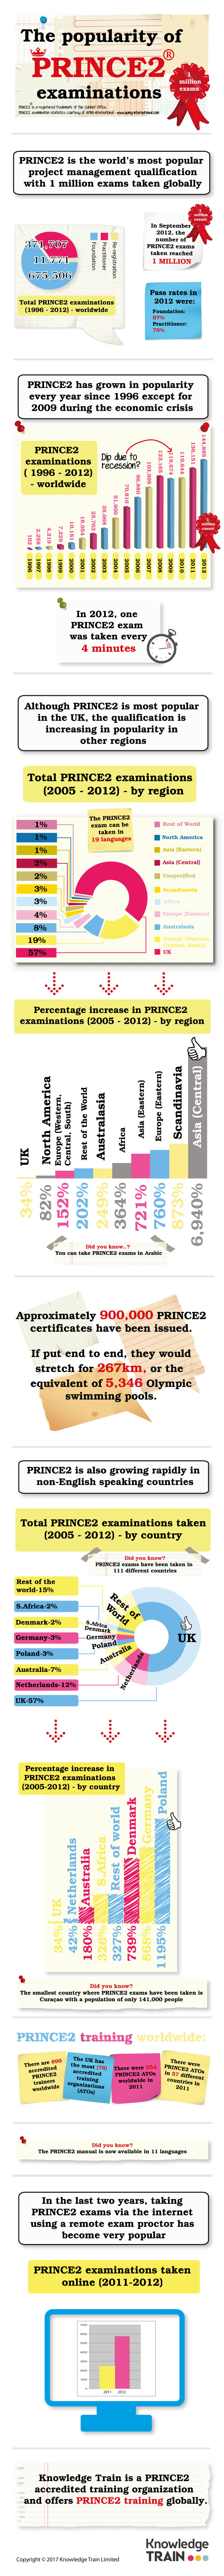 PRINCE2 Worldwide Popularity | Infographic